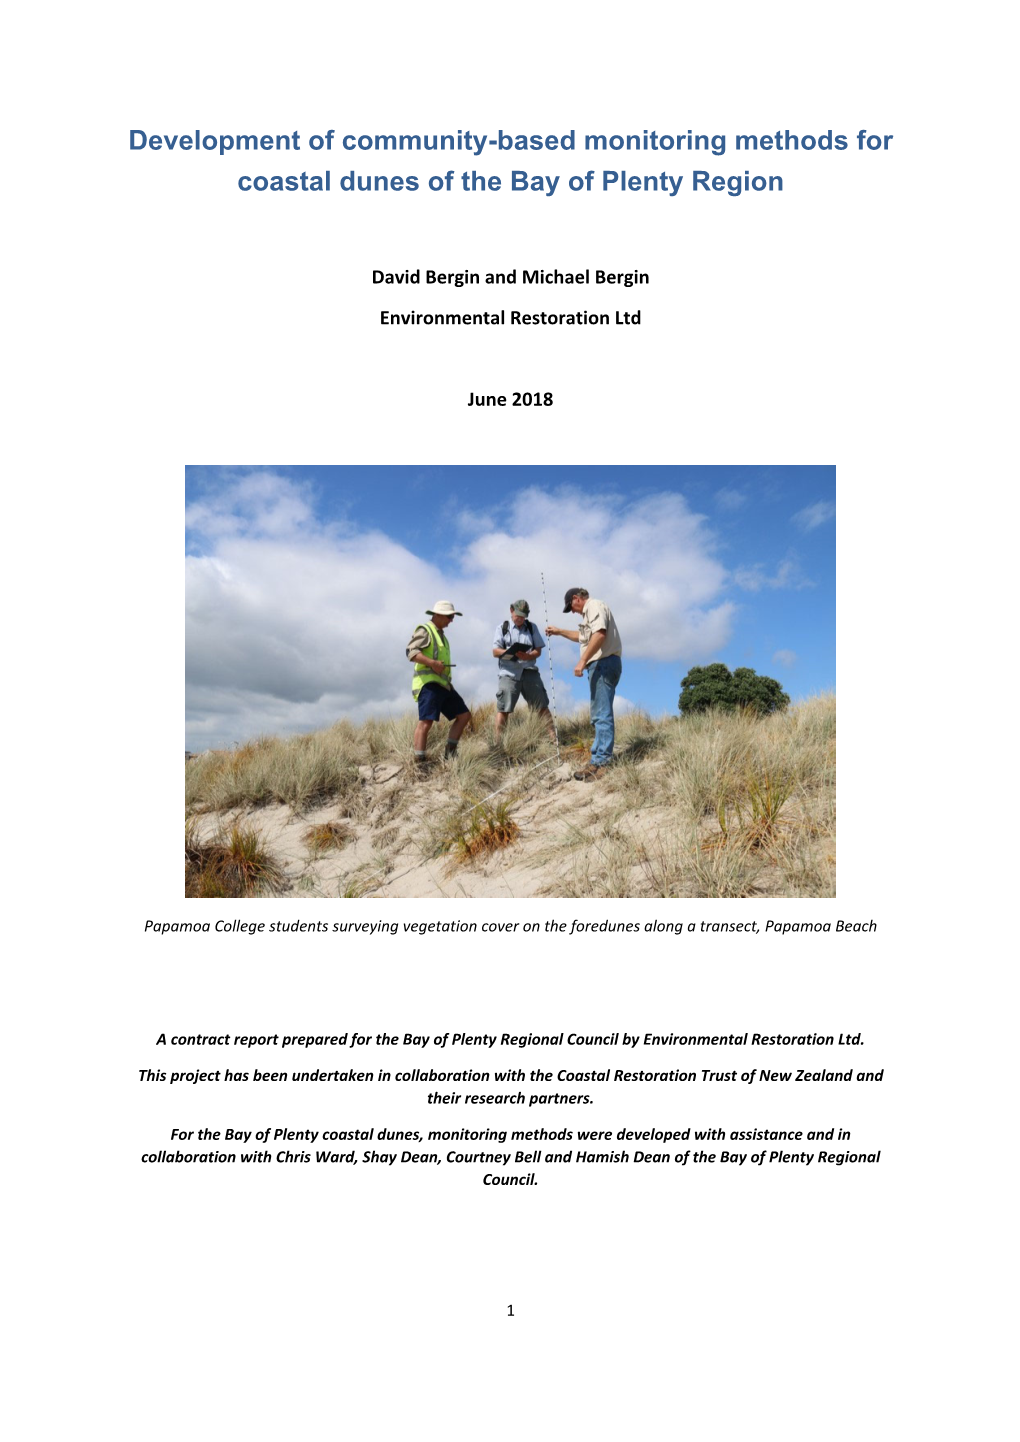 Development of Community-Based Monitoring Methods for Coastal Dunes of the Bay of Plenty Region